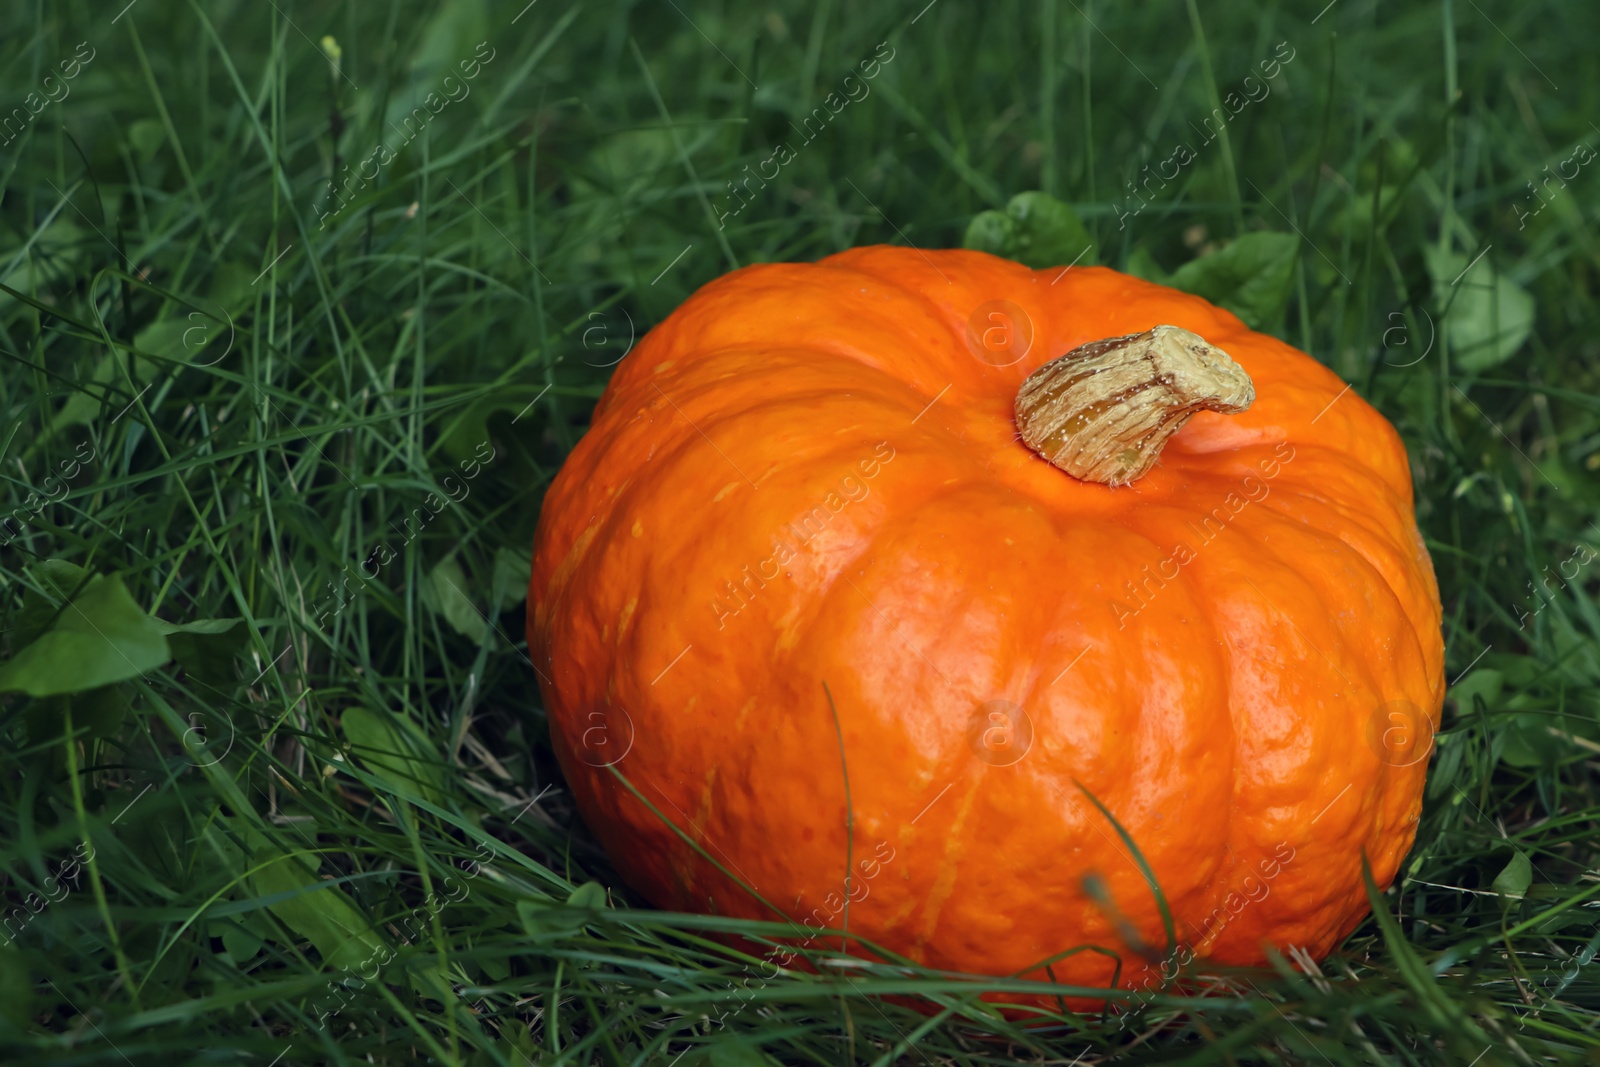 Photo of Ripe orange pumpkin among green grass outdoors, closeup. Space for text